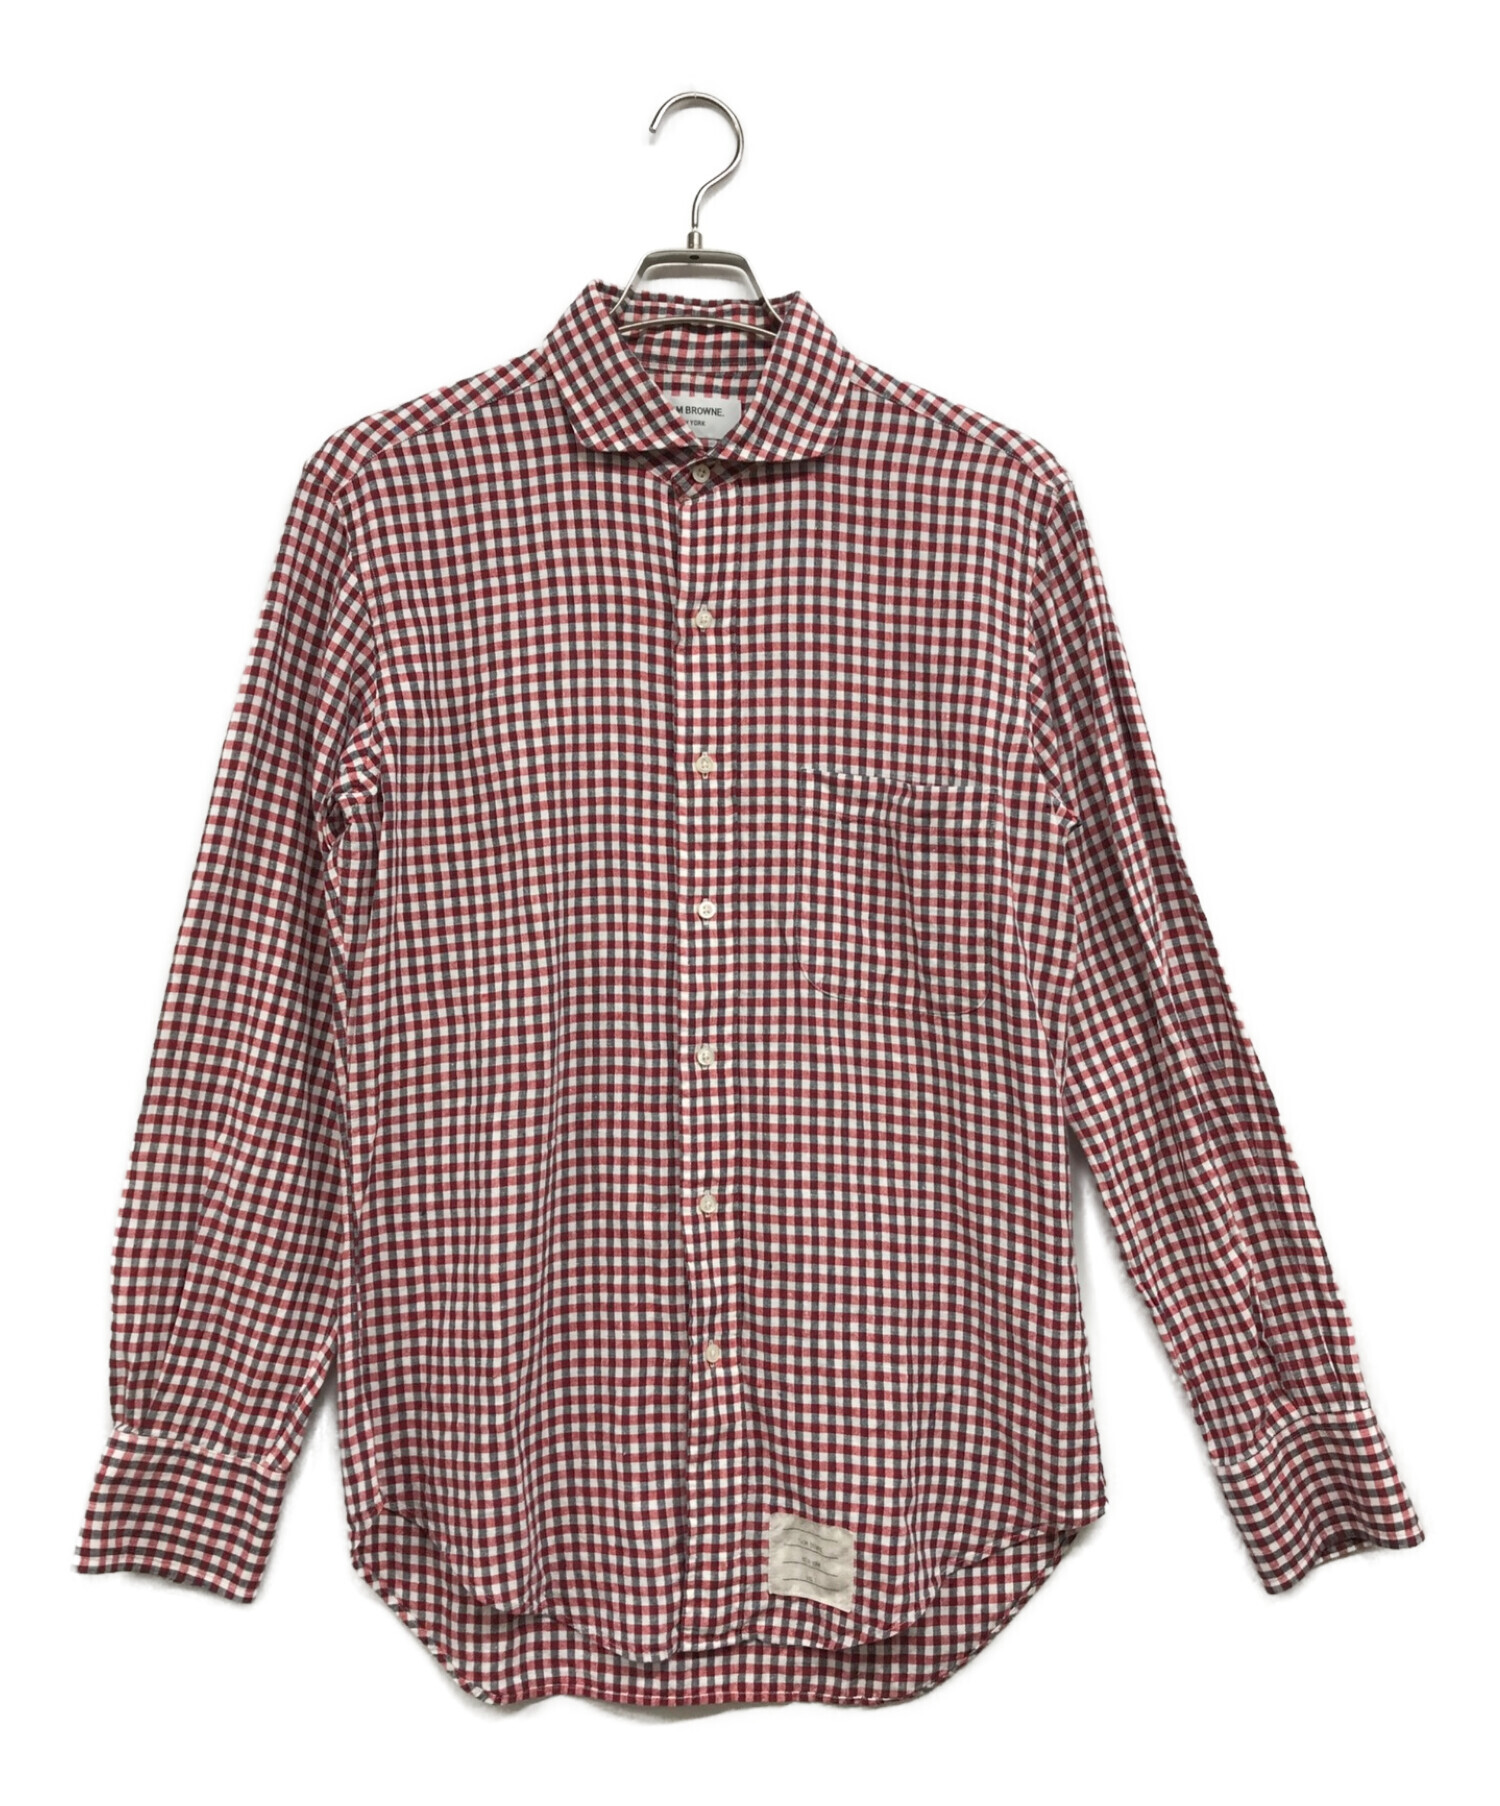 THOM BROWNE BD コットンネルチェックシャツ トムブラウン グレー系袖丈約62cm